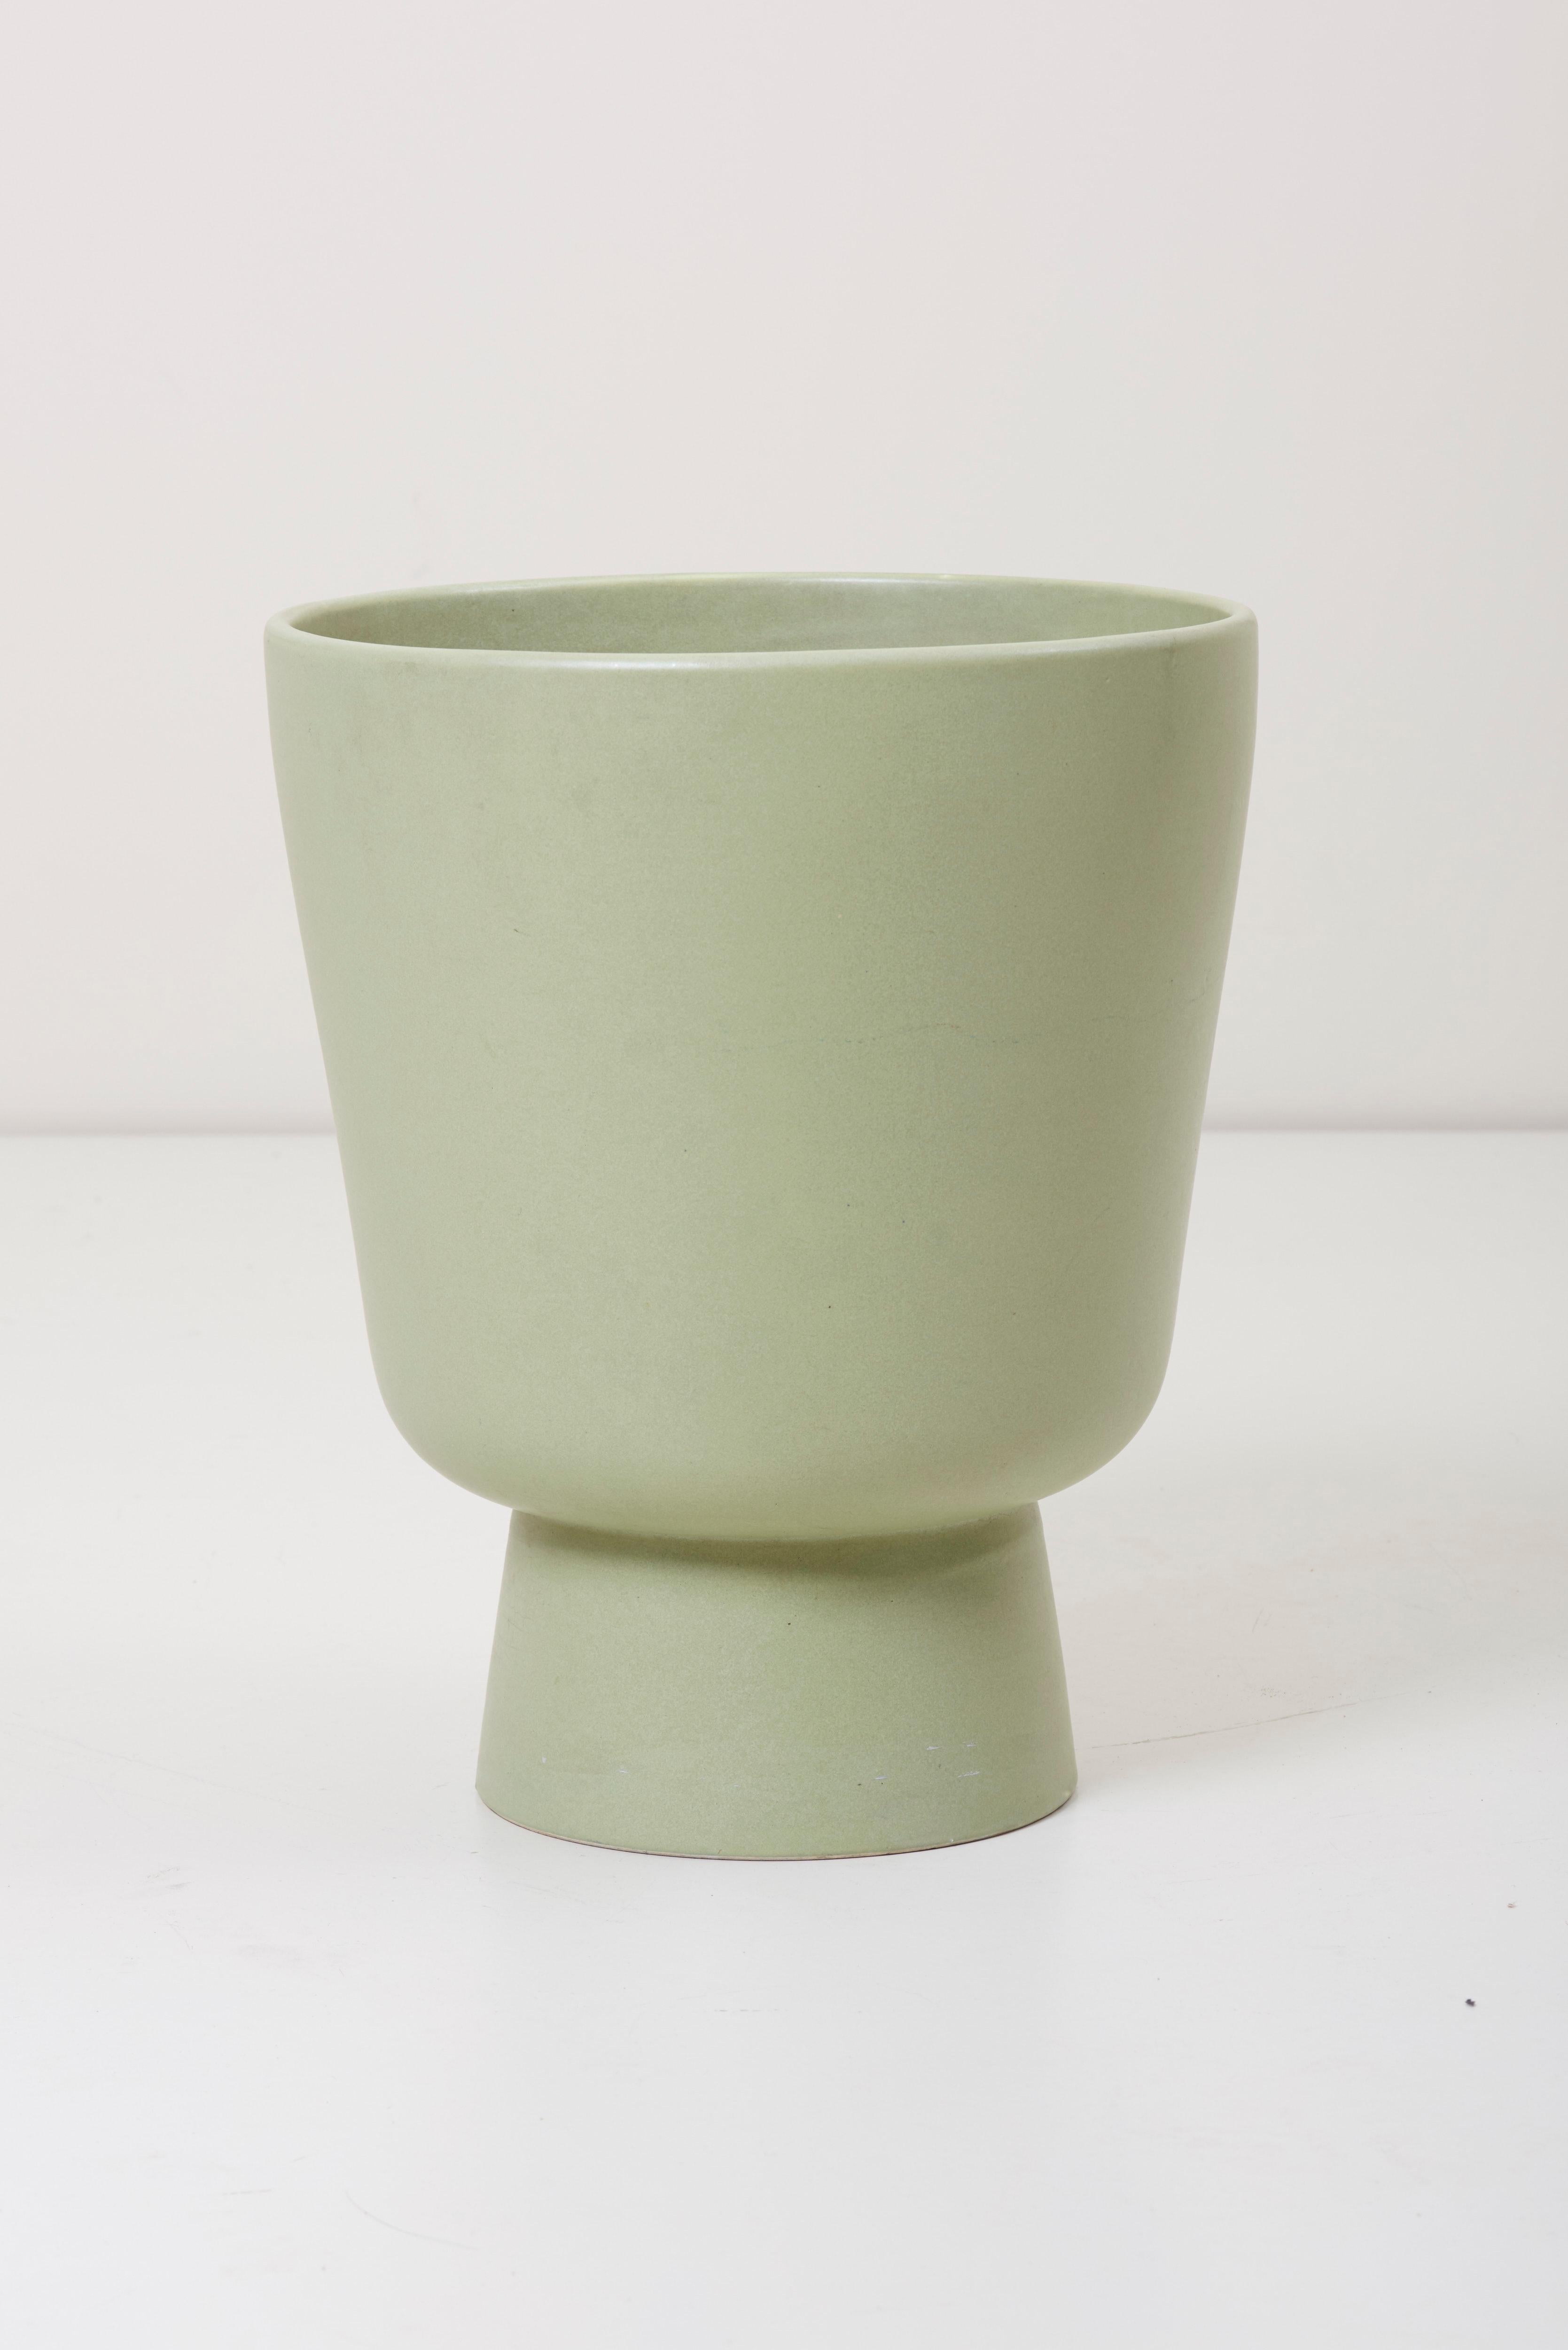 Malcolm Leland chalice planter, Model L-20, USA, 1960s matte green glaze ceramic.

